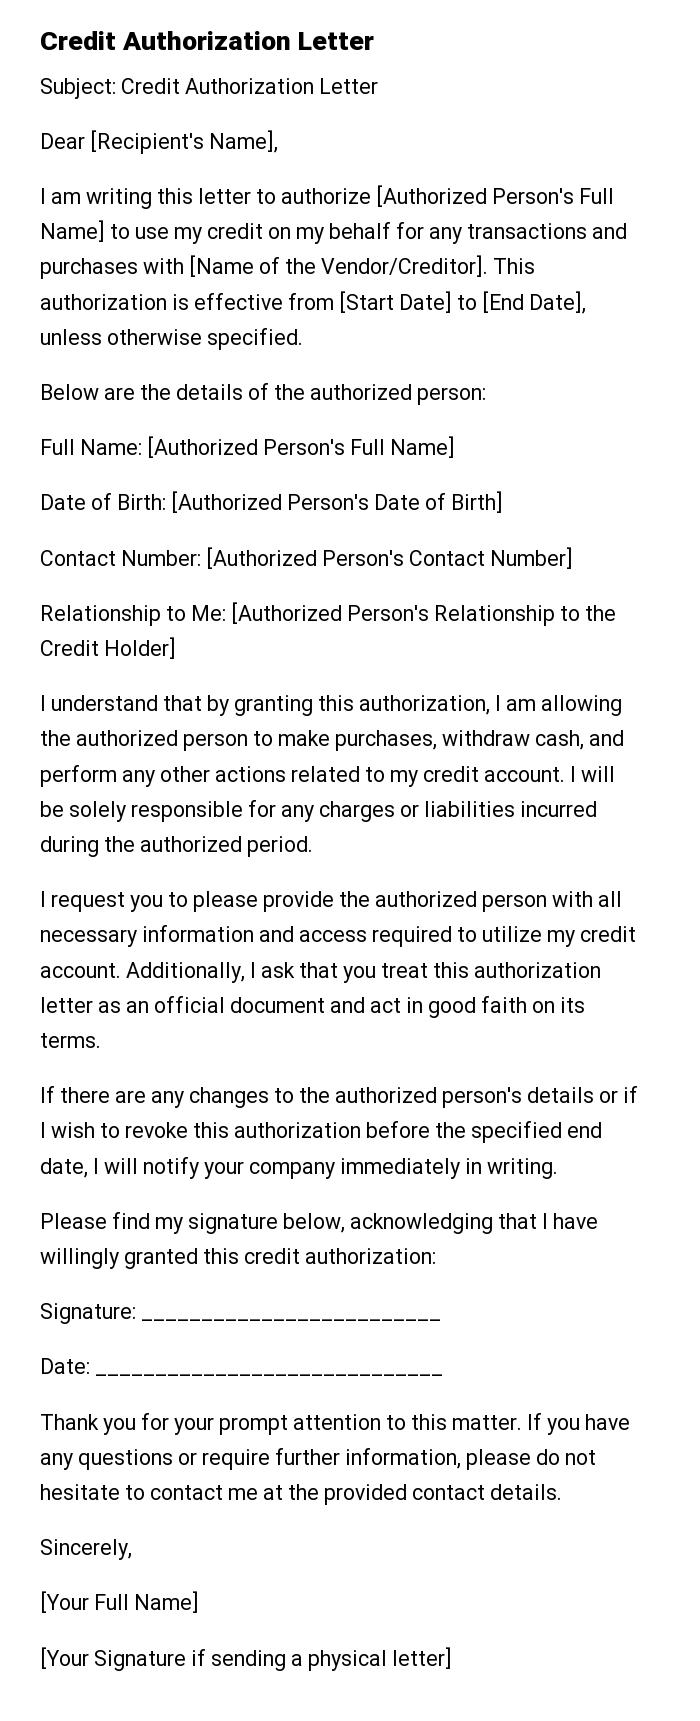 Credit Authorization Letter